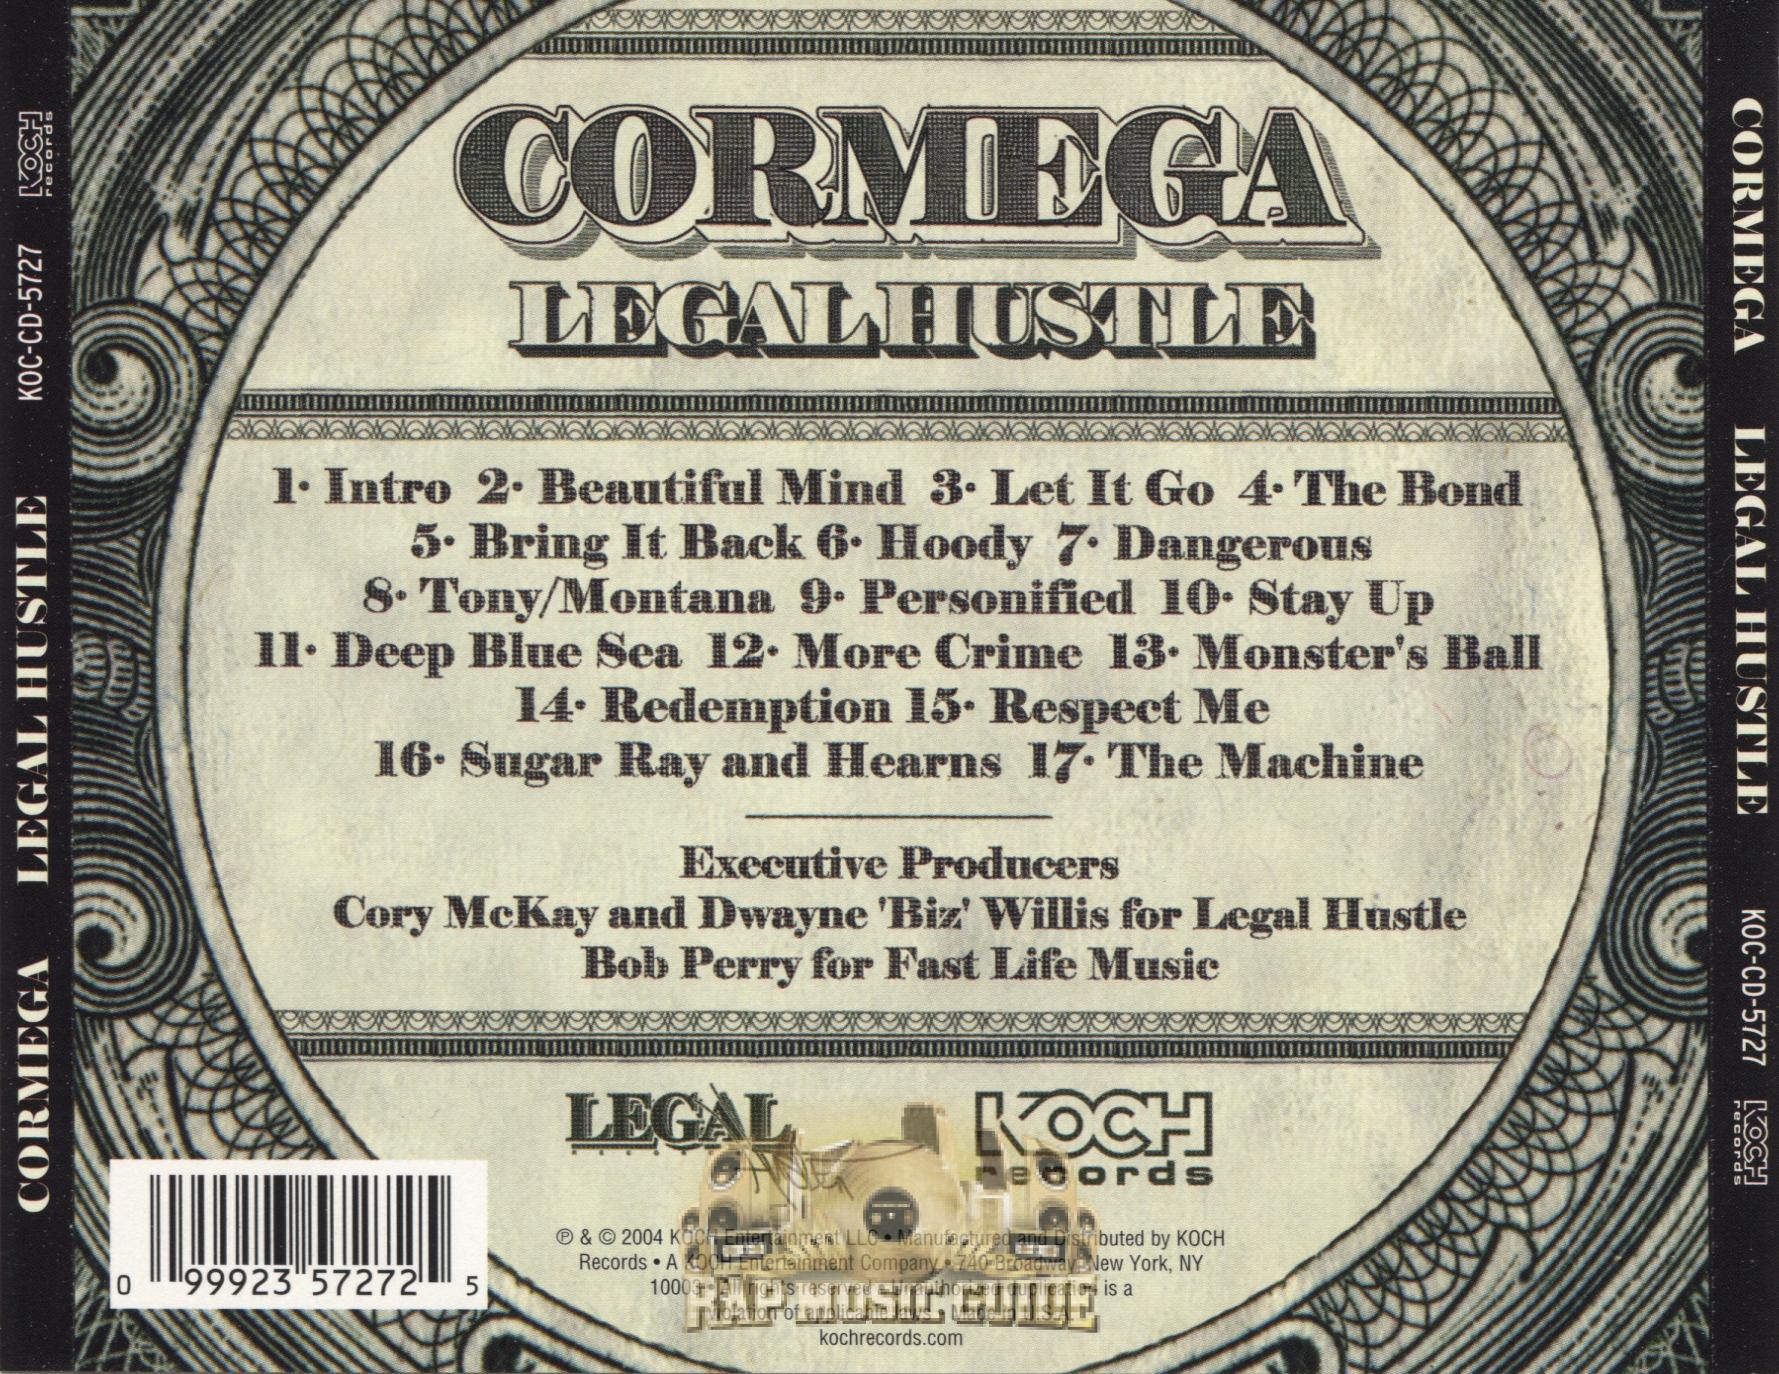 Cormega Legal Hustle Cd Rap Music Guide